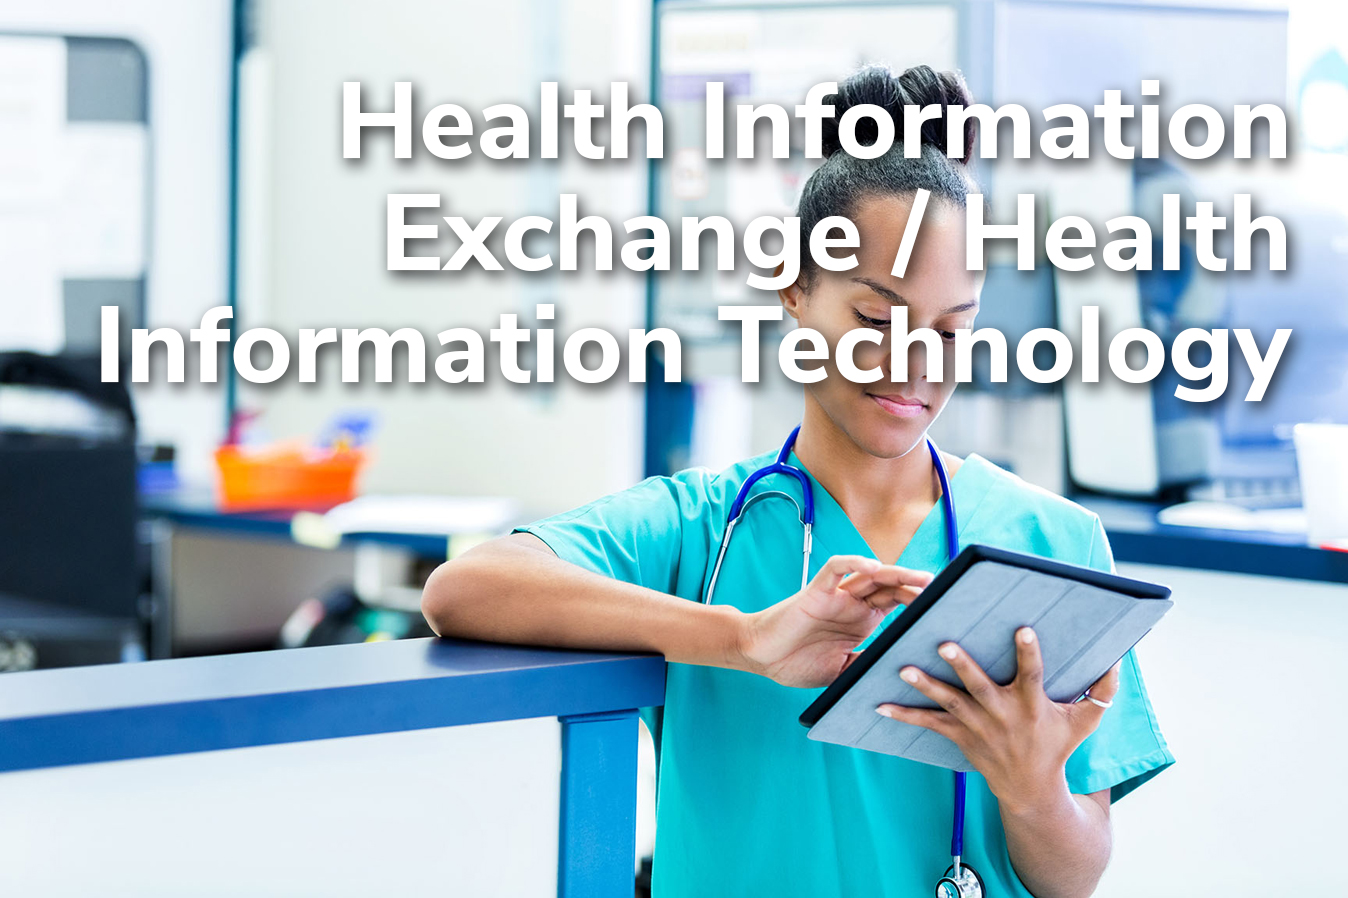 Health Information Exchange/Health Information Technology Title Frame